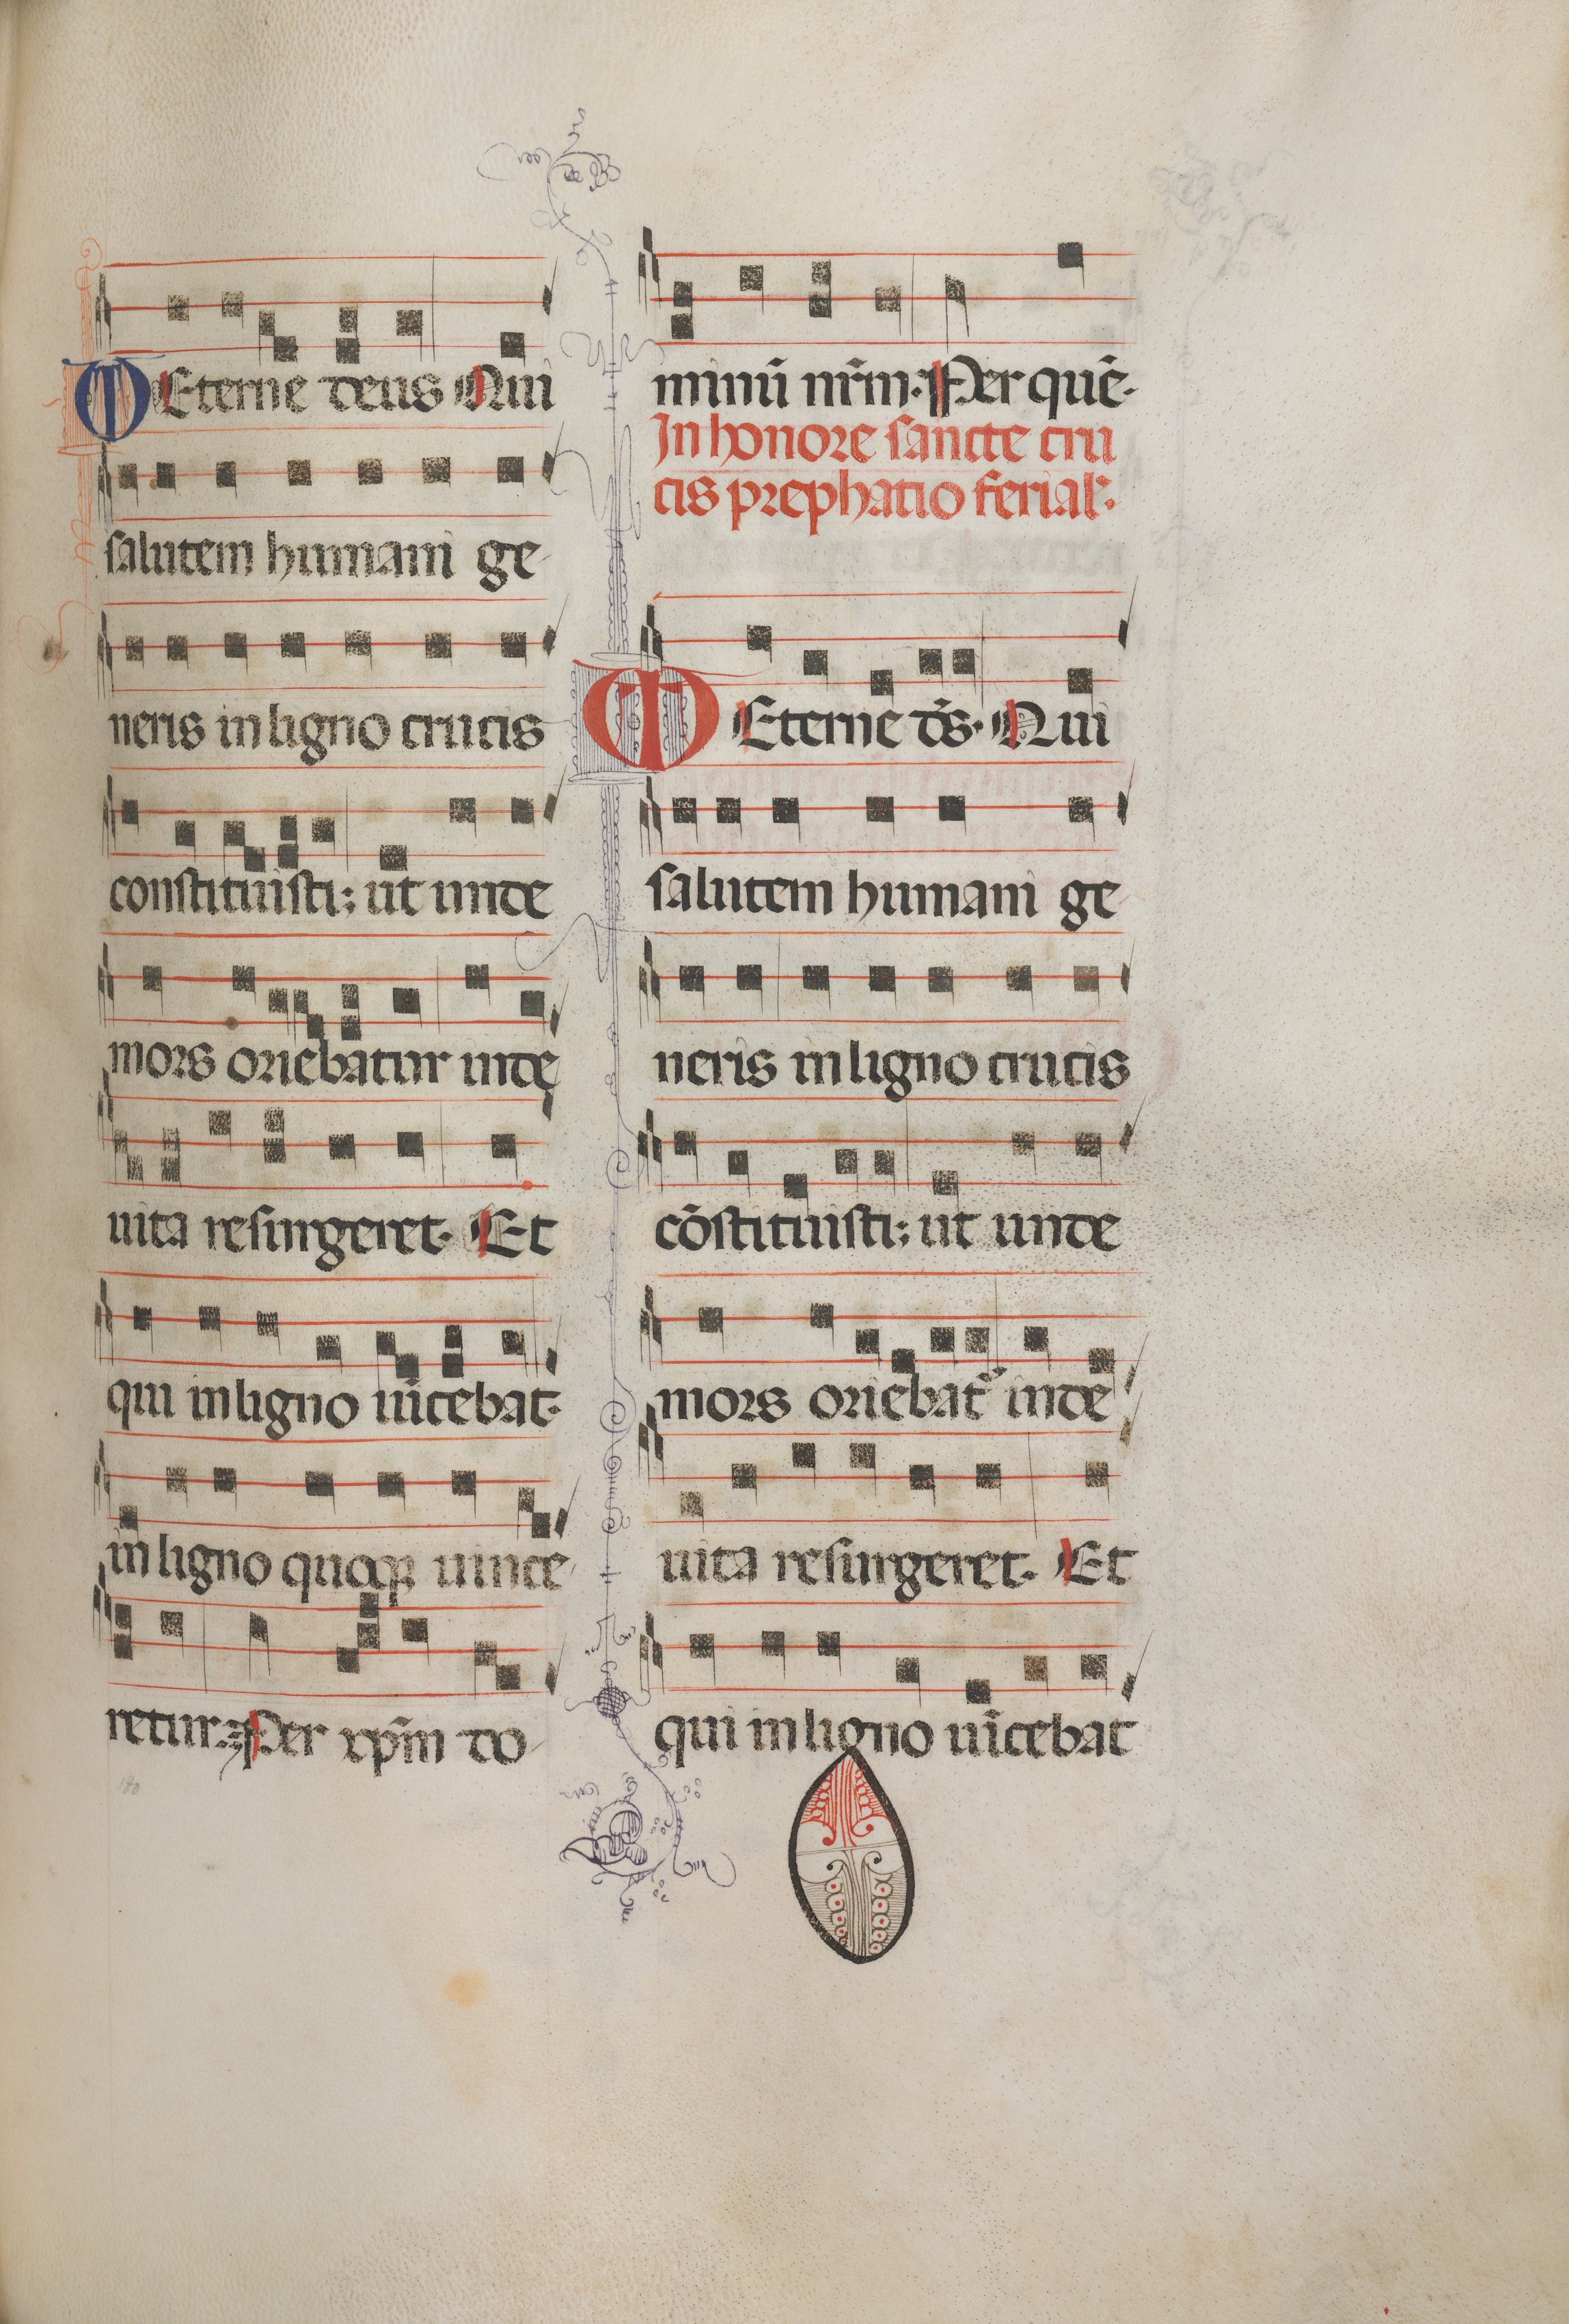 Missale: Fol. 182: Music for various ordinary prayers